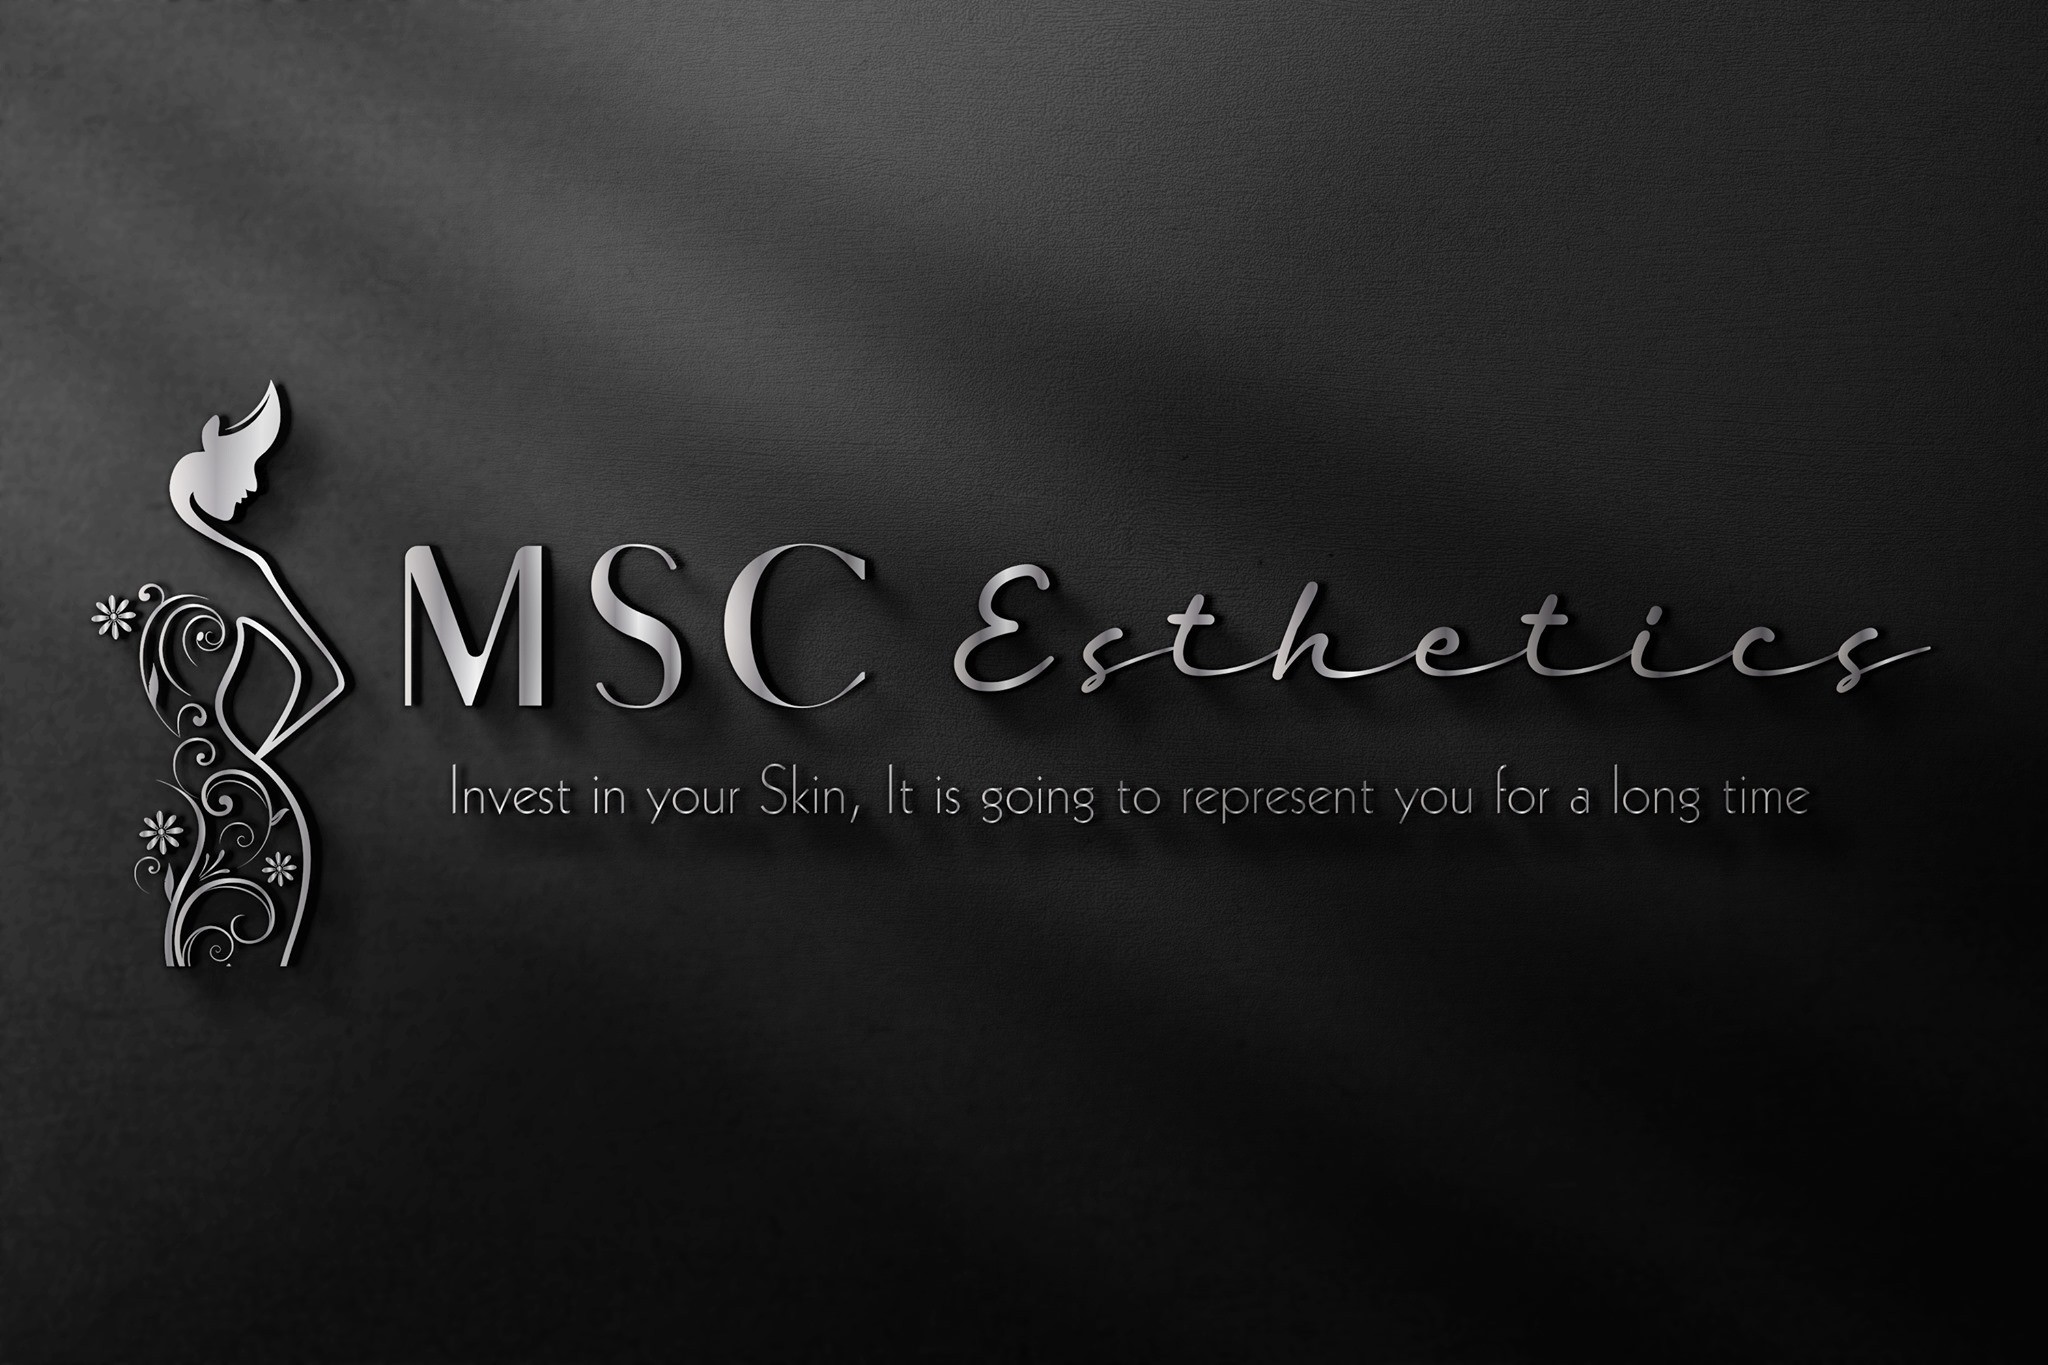 MSC Esthetics